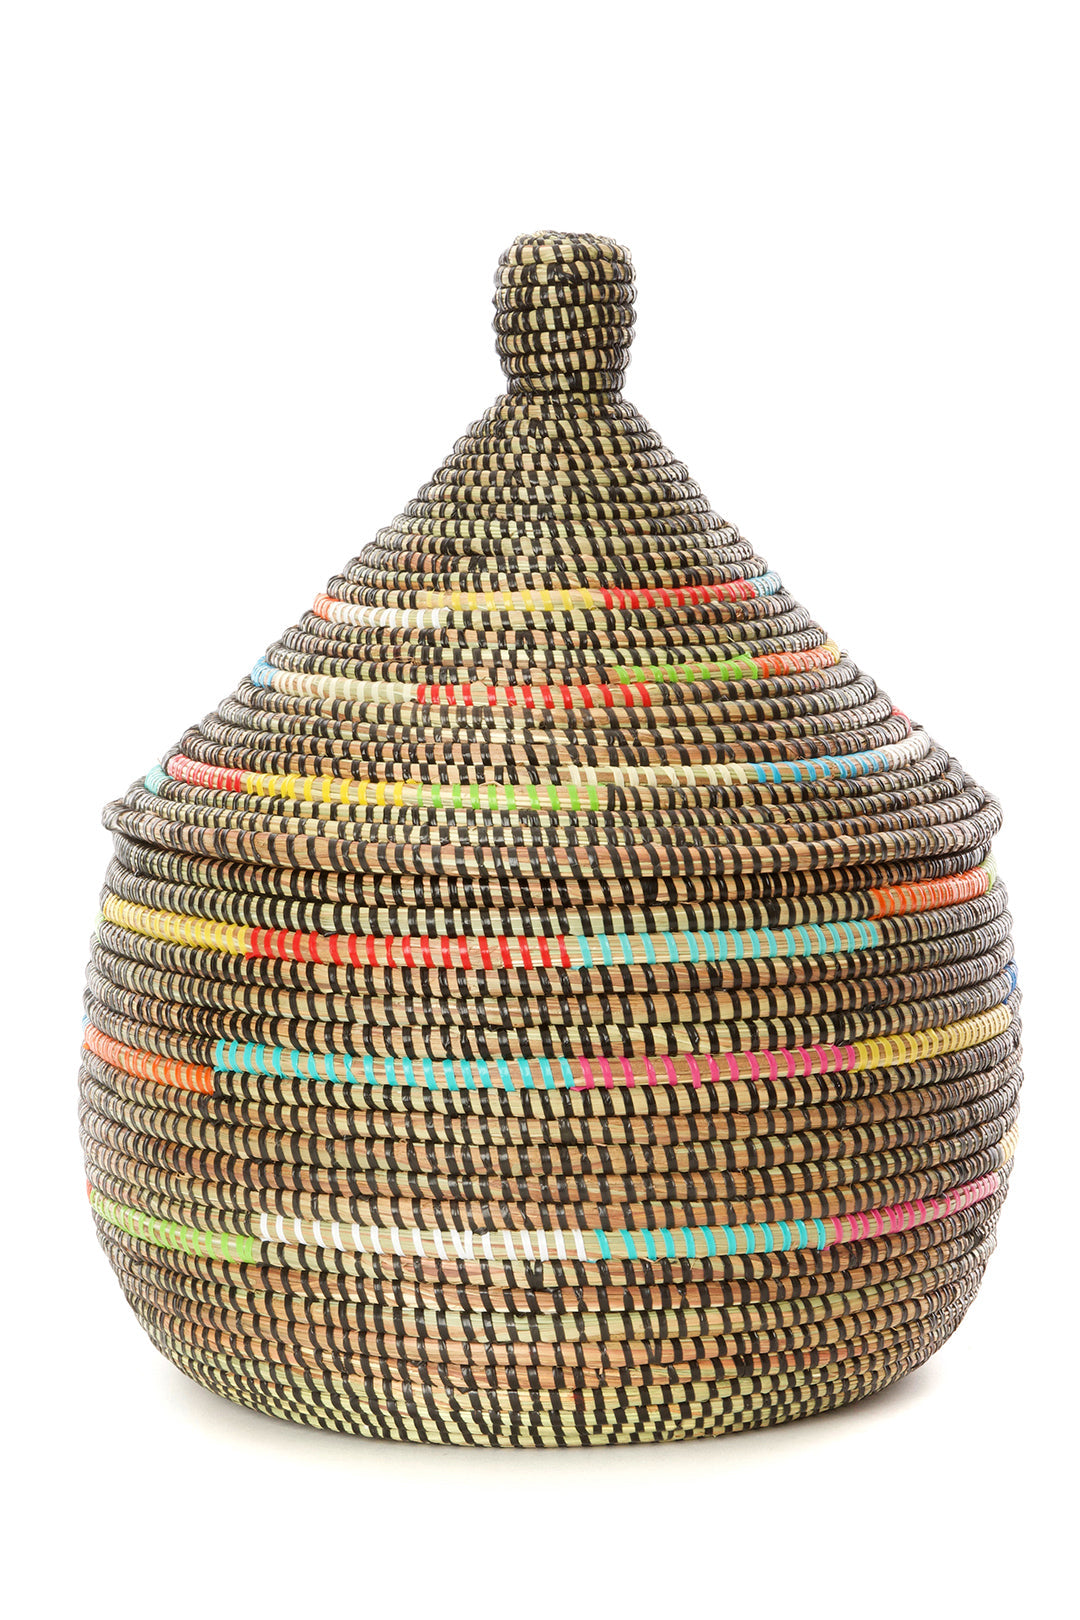 Black Warming Basket with Colorful Prism Spiral